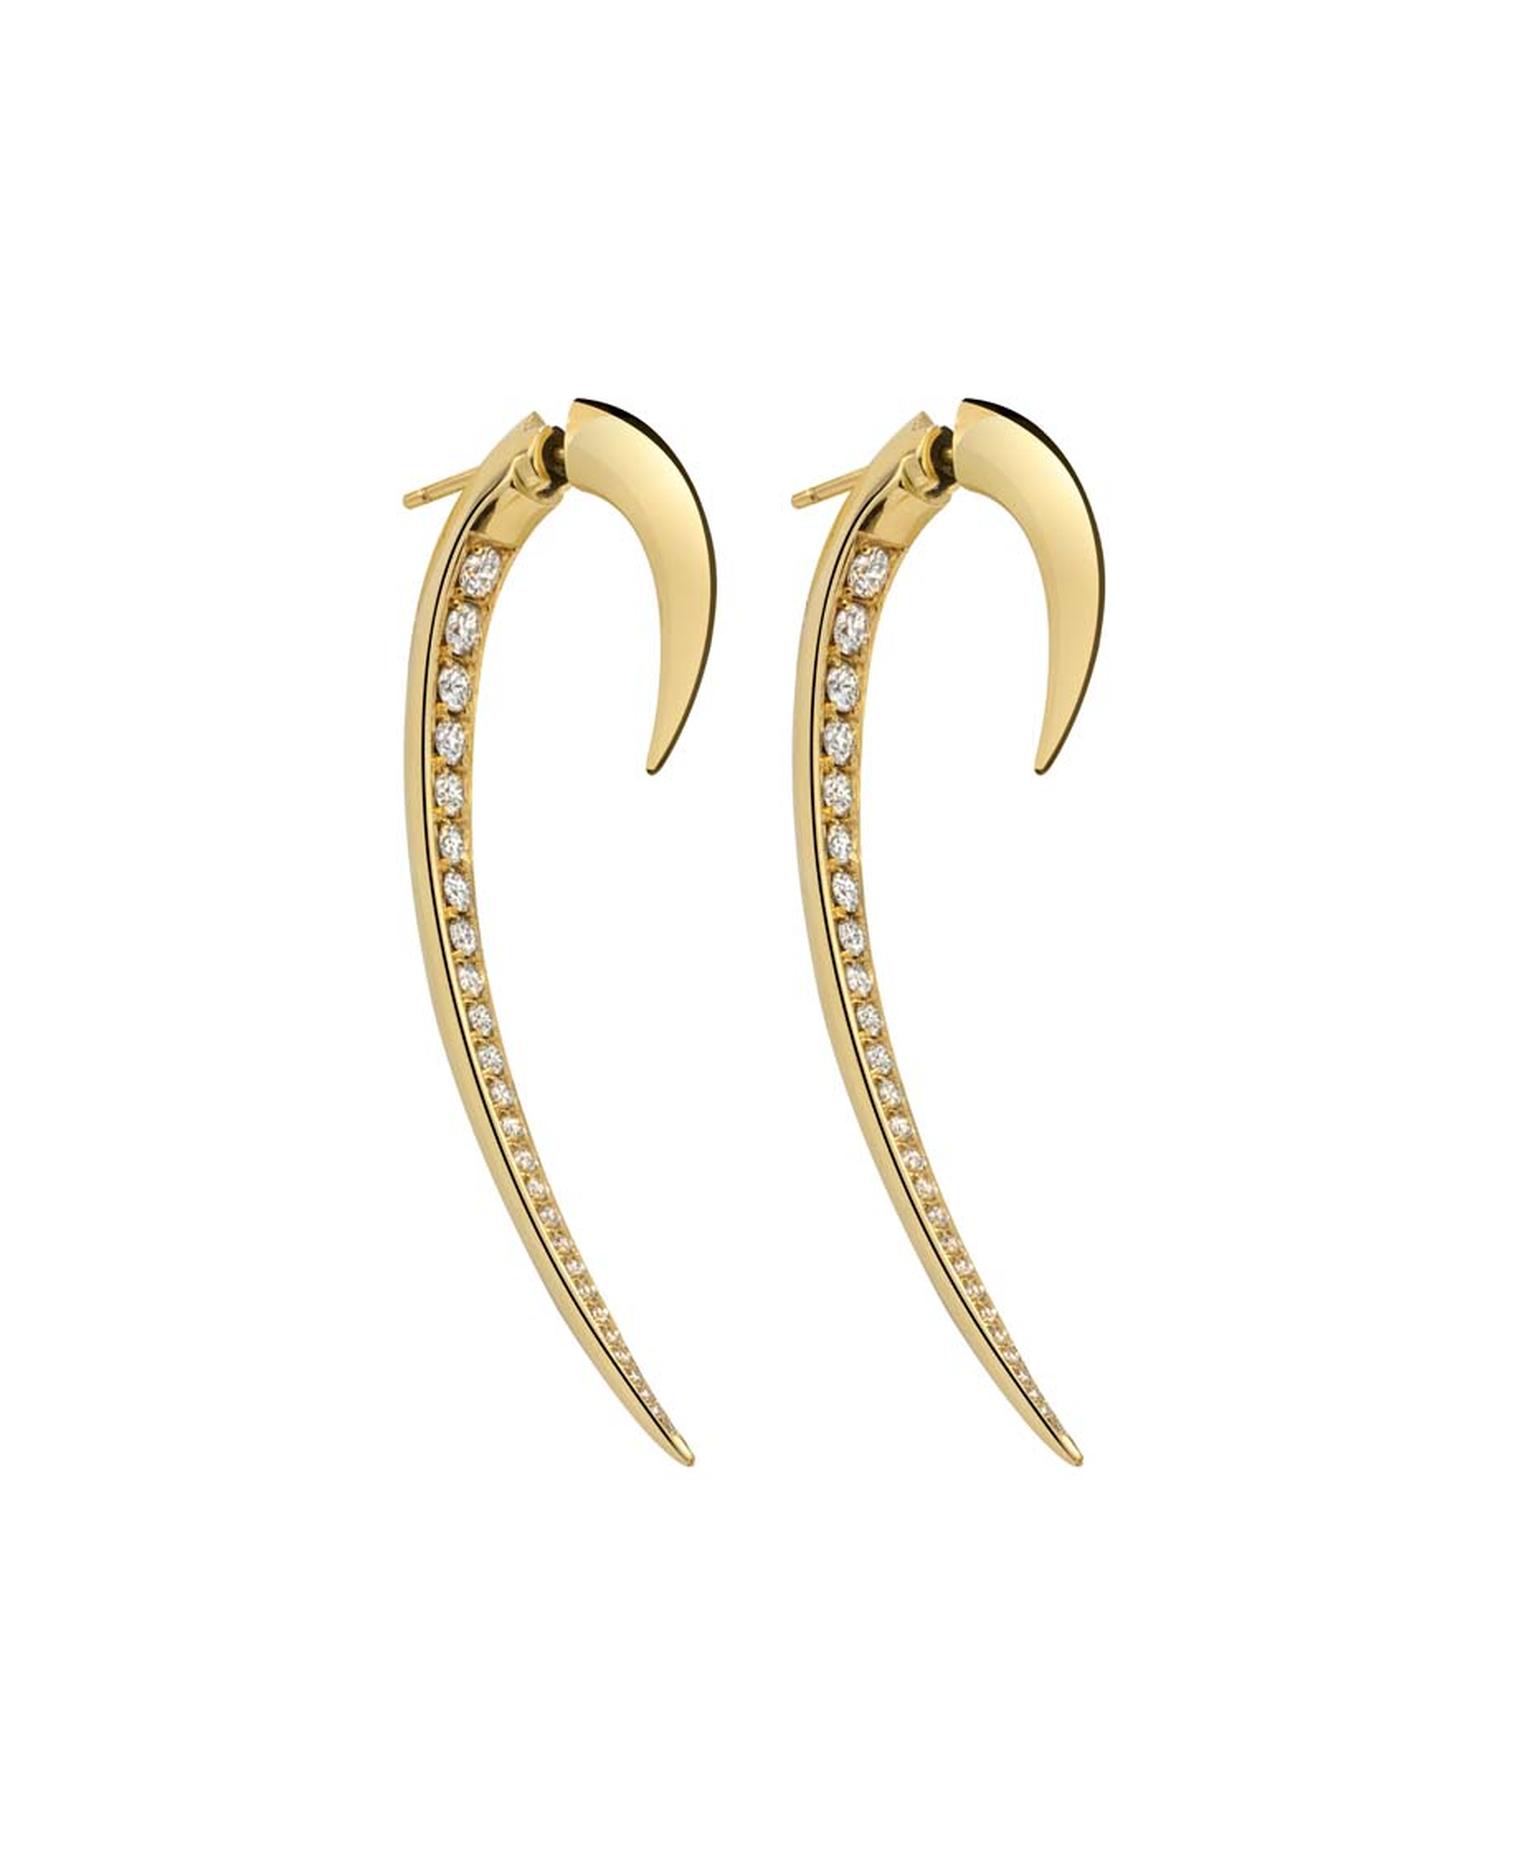 Shaun Leane Hook earrings in yellow gold with diamonds (£6,790).